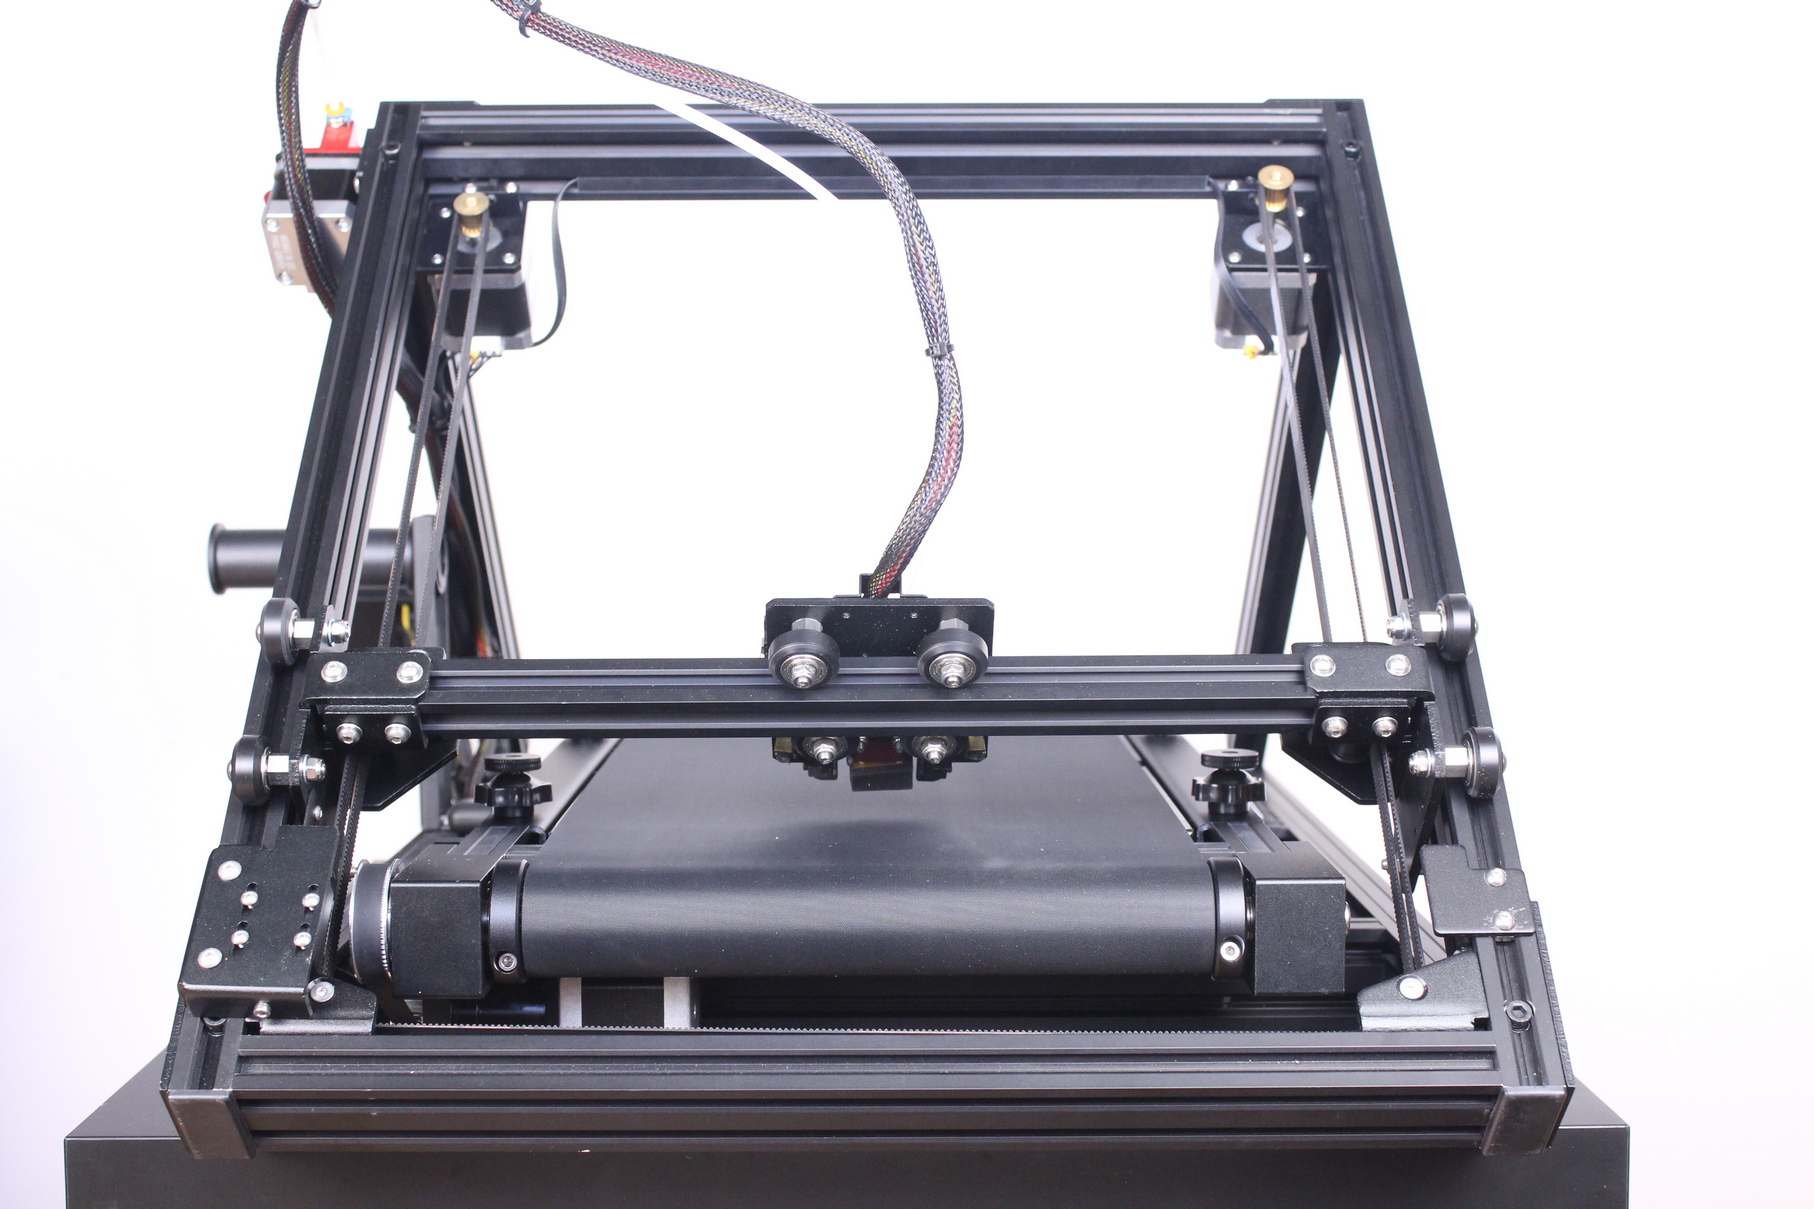 Creality CR 30 3DPrintMill Design 1 | Creality 3DPrintMill (CR-30) Review: Belt Printer for Batch 3D Printing